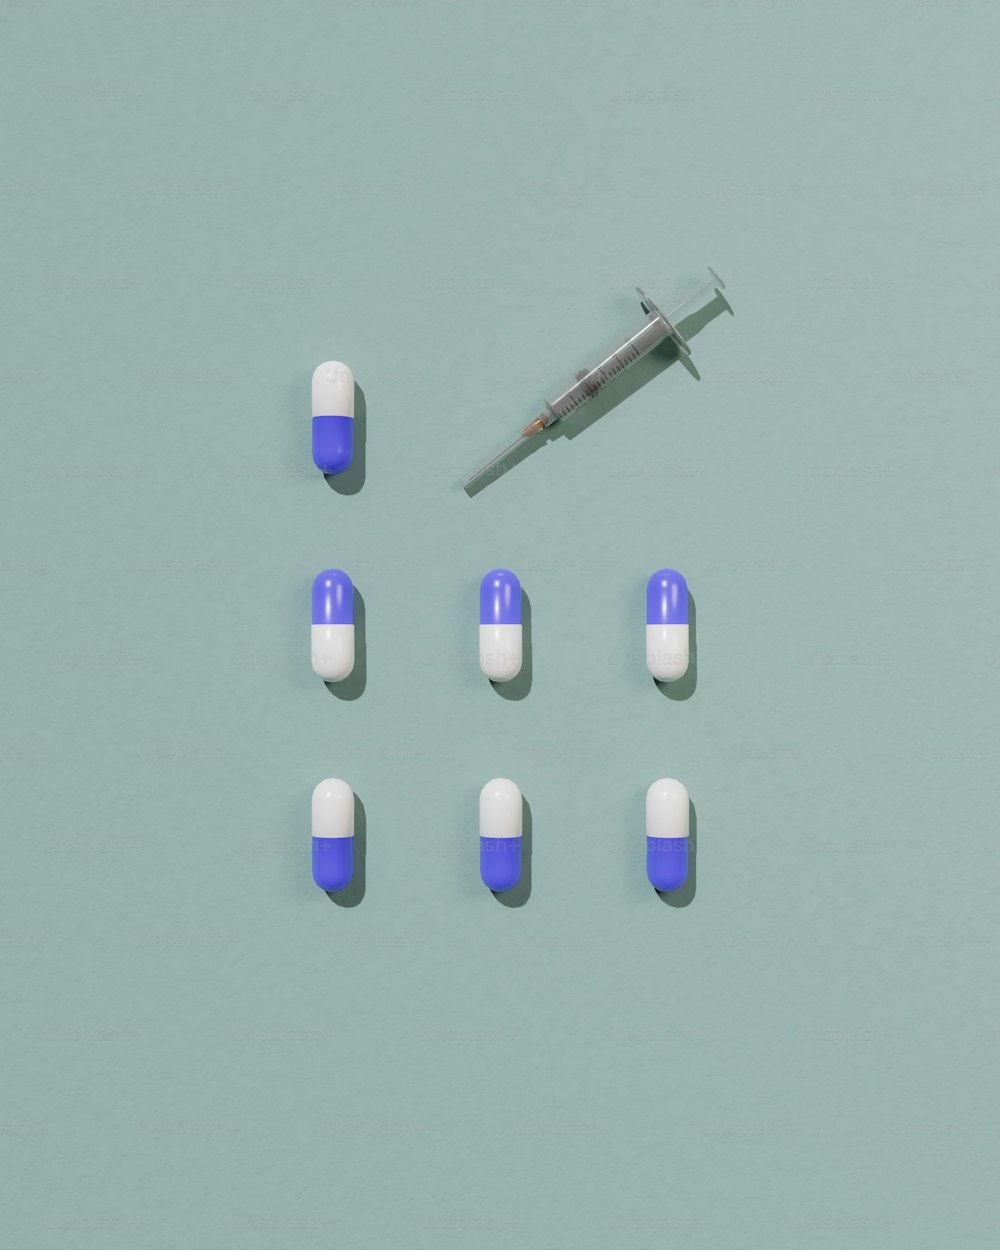 Un grupo de píldoras azules y blancas junto a un syquet